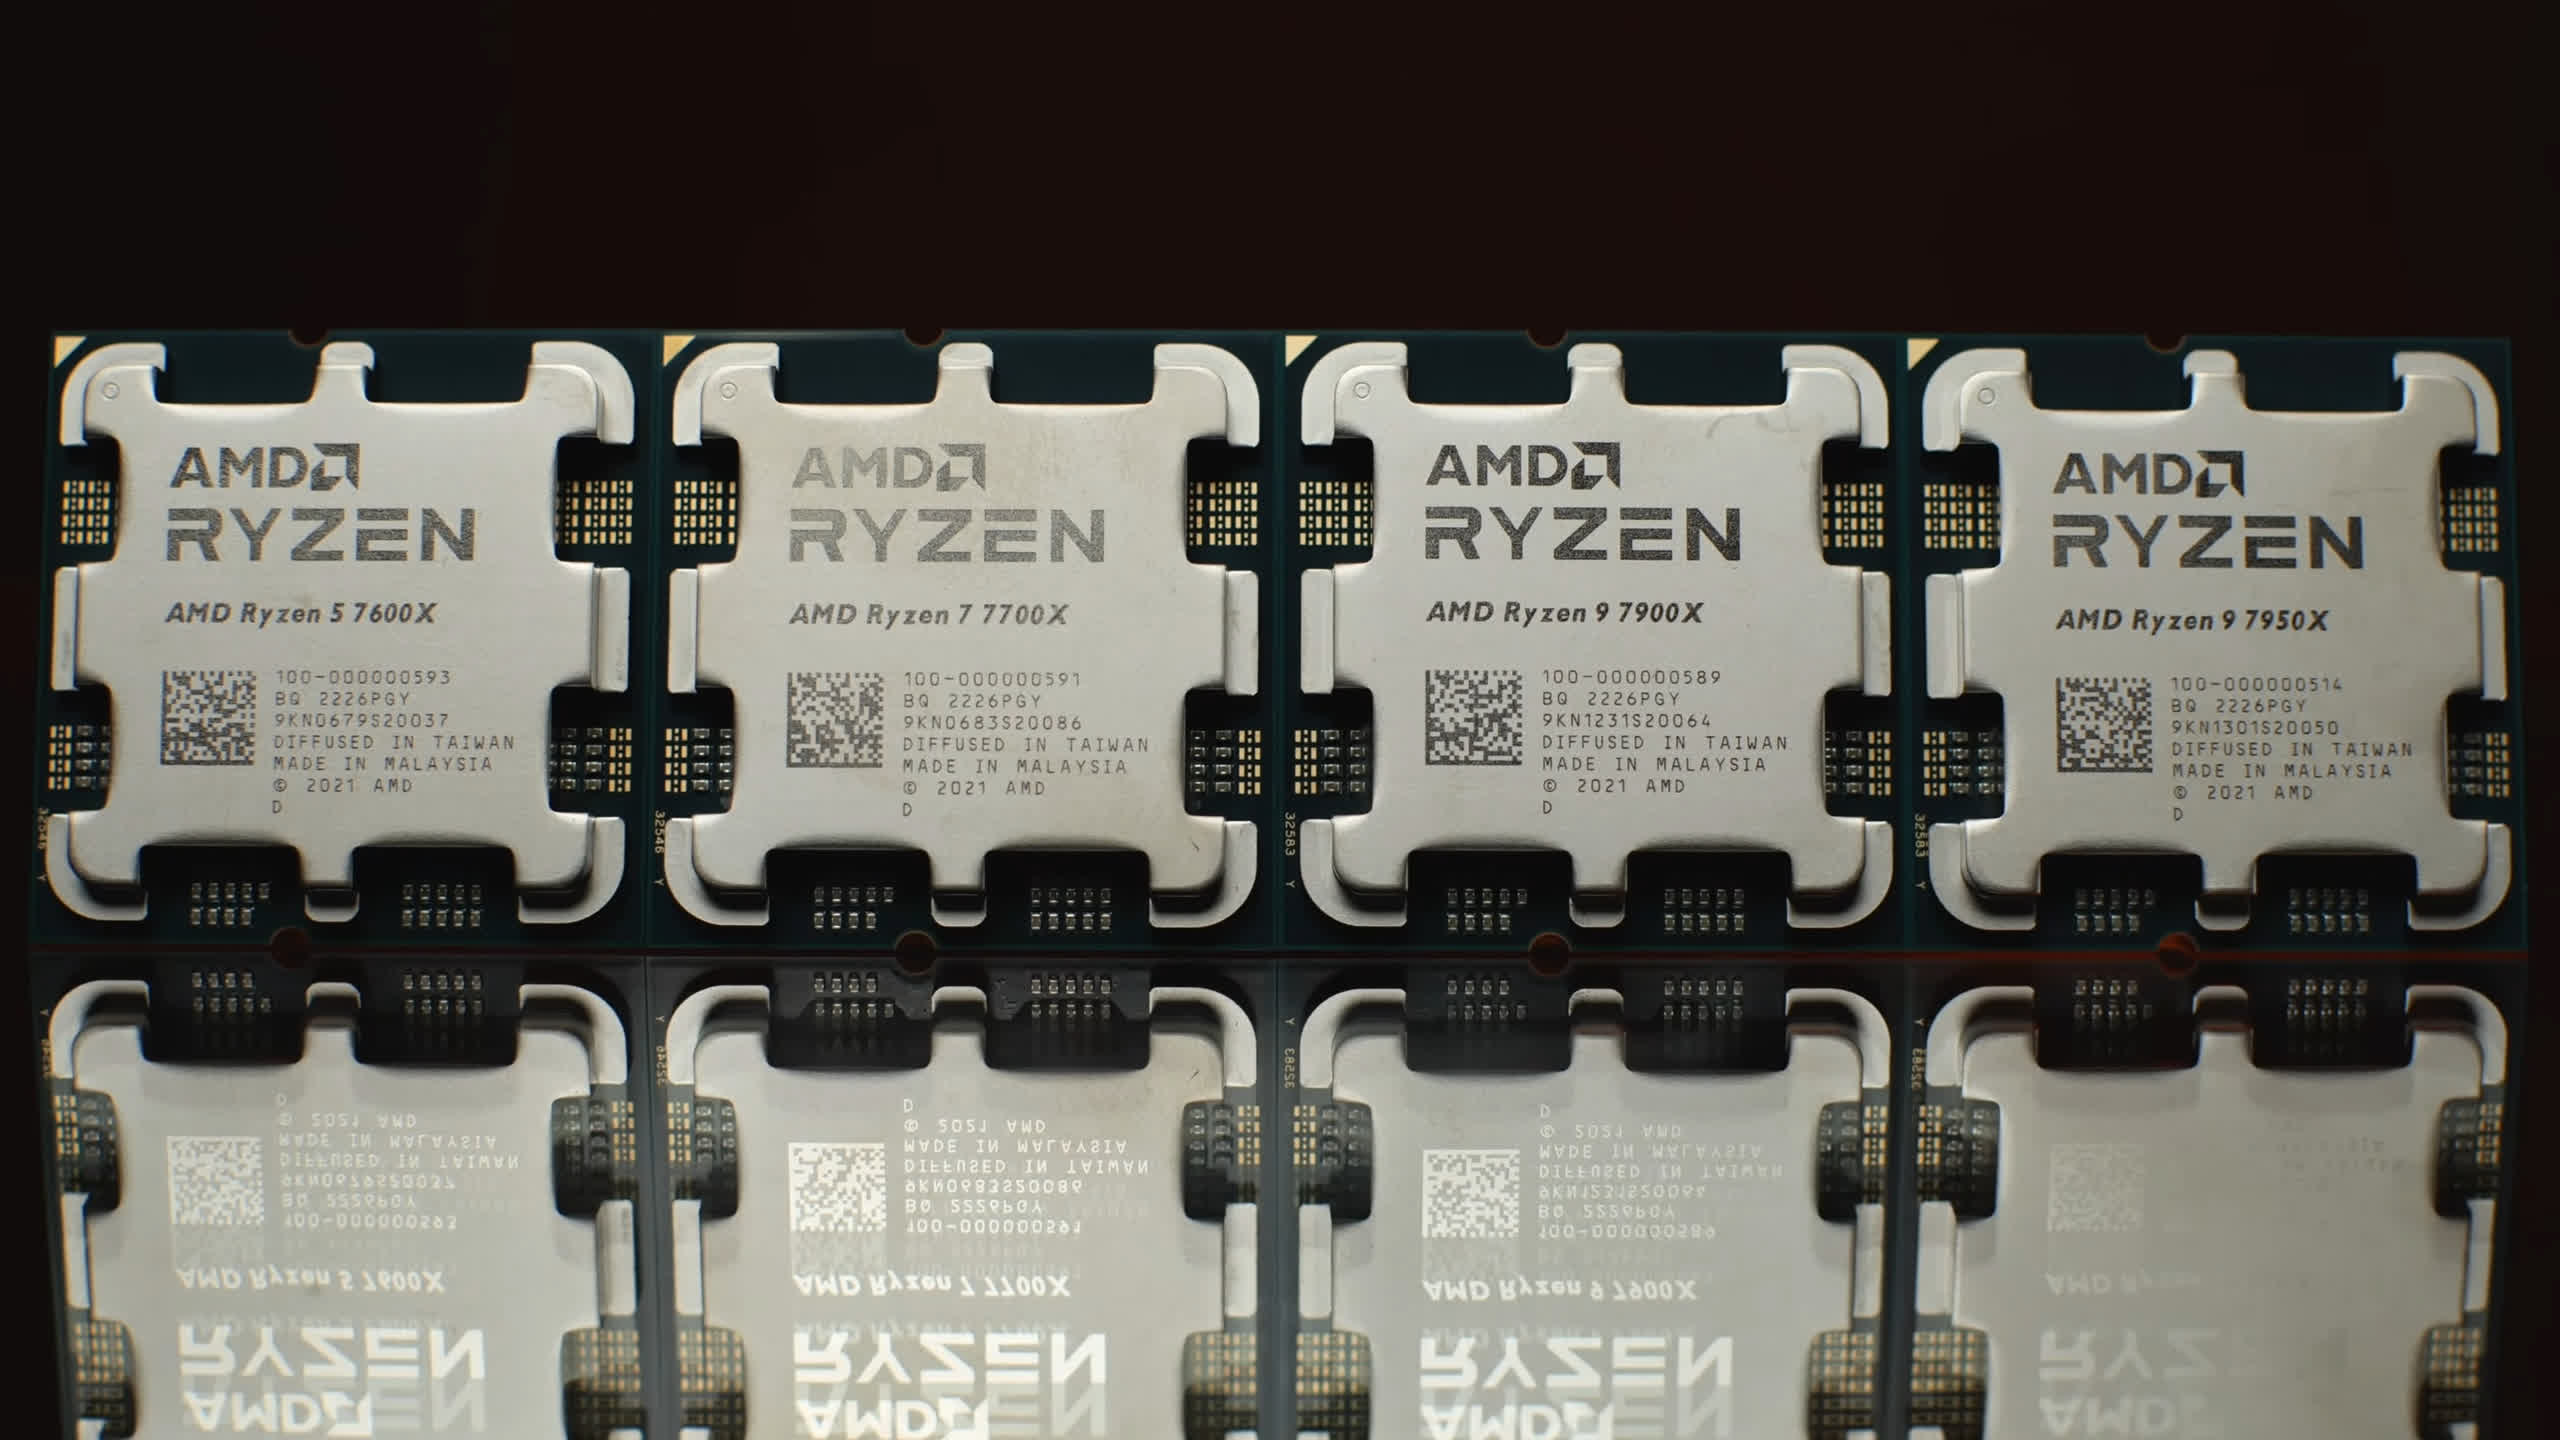 AMD Ryzen 9 7950X prototype demolishes the 5950X in Cinebench R23